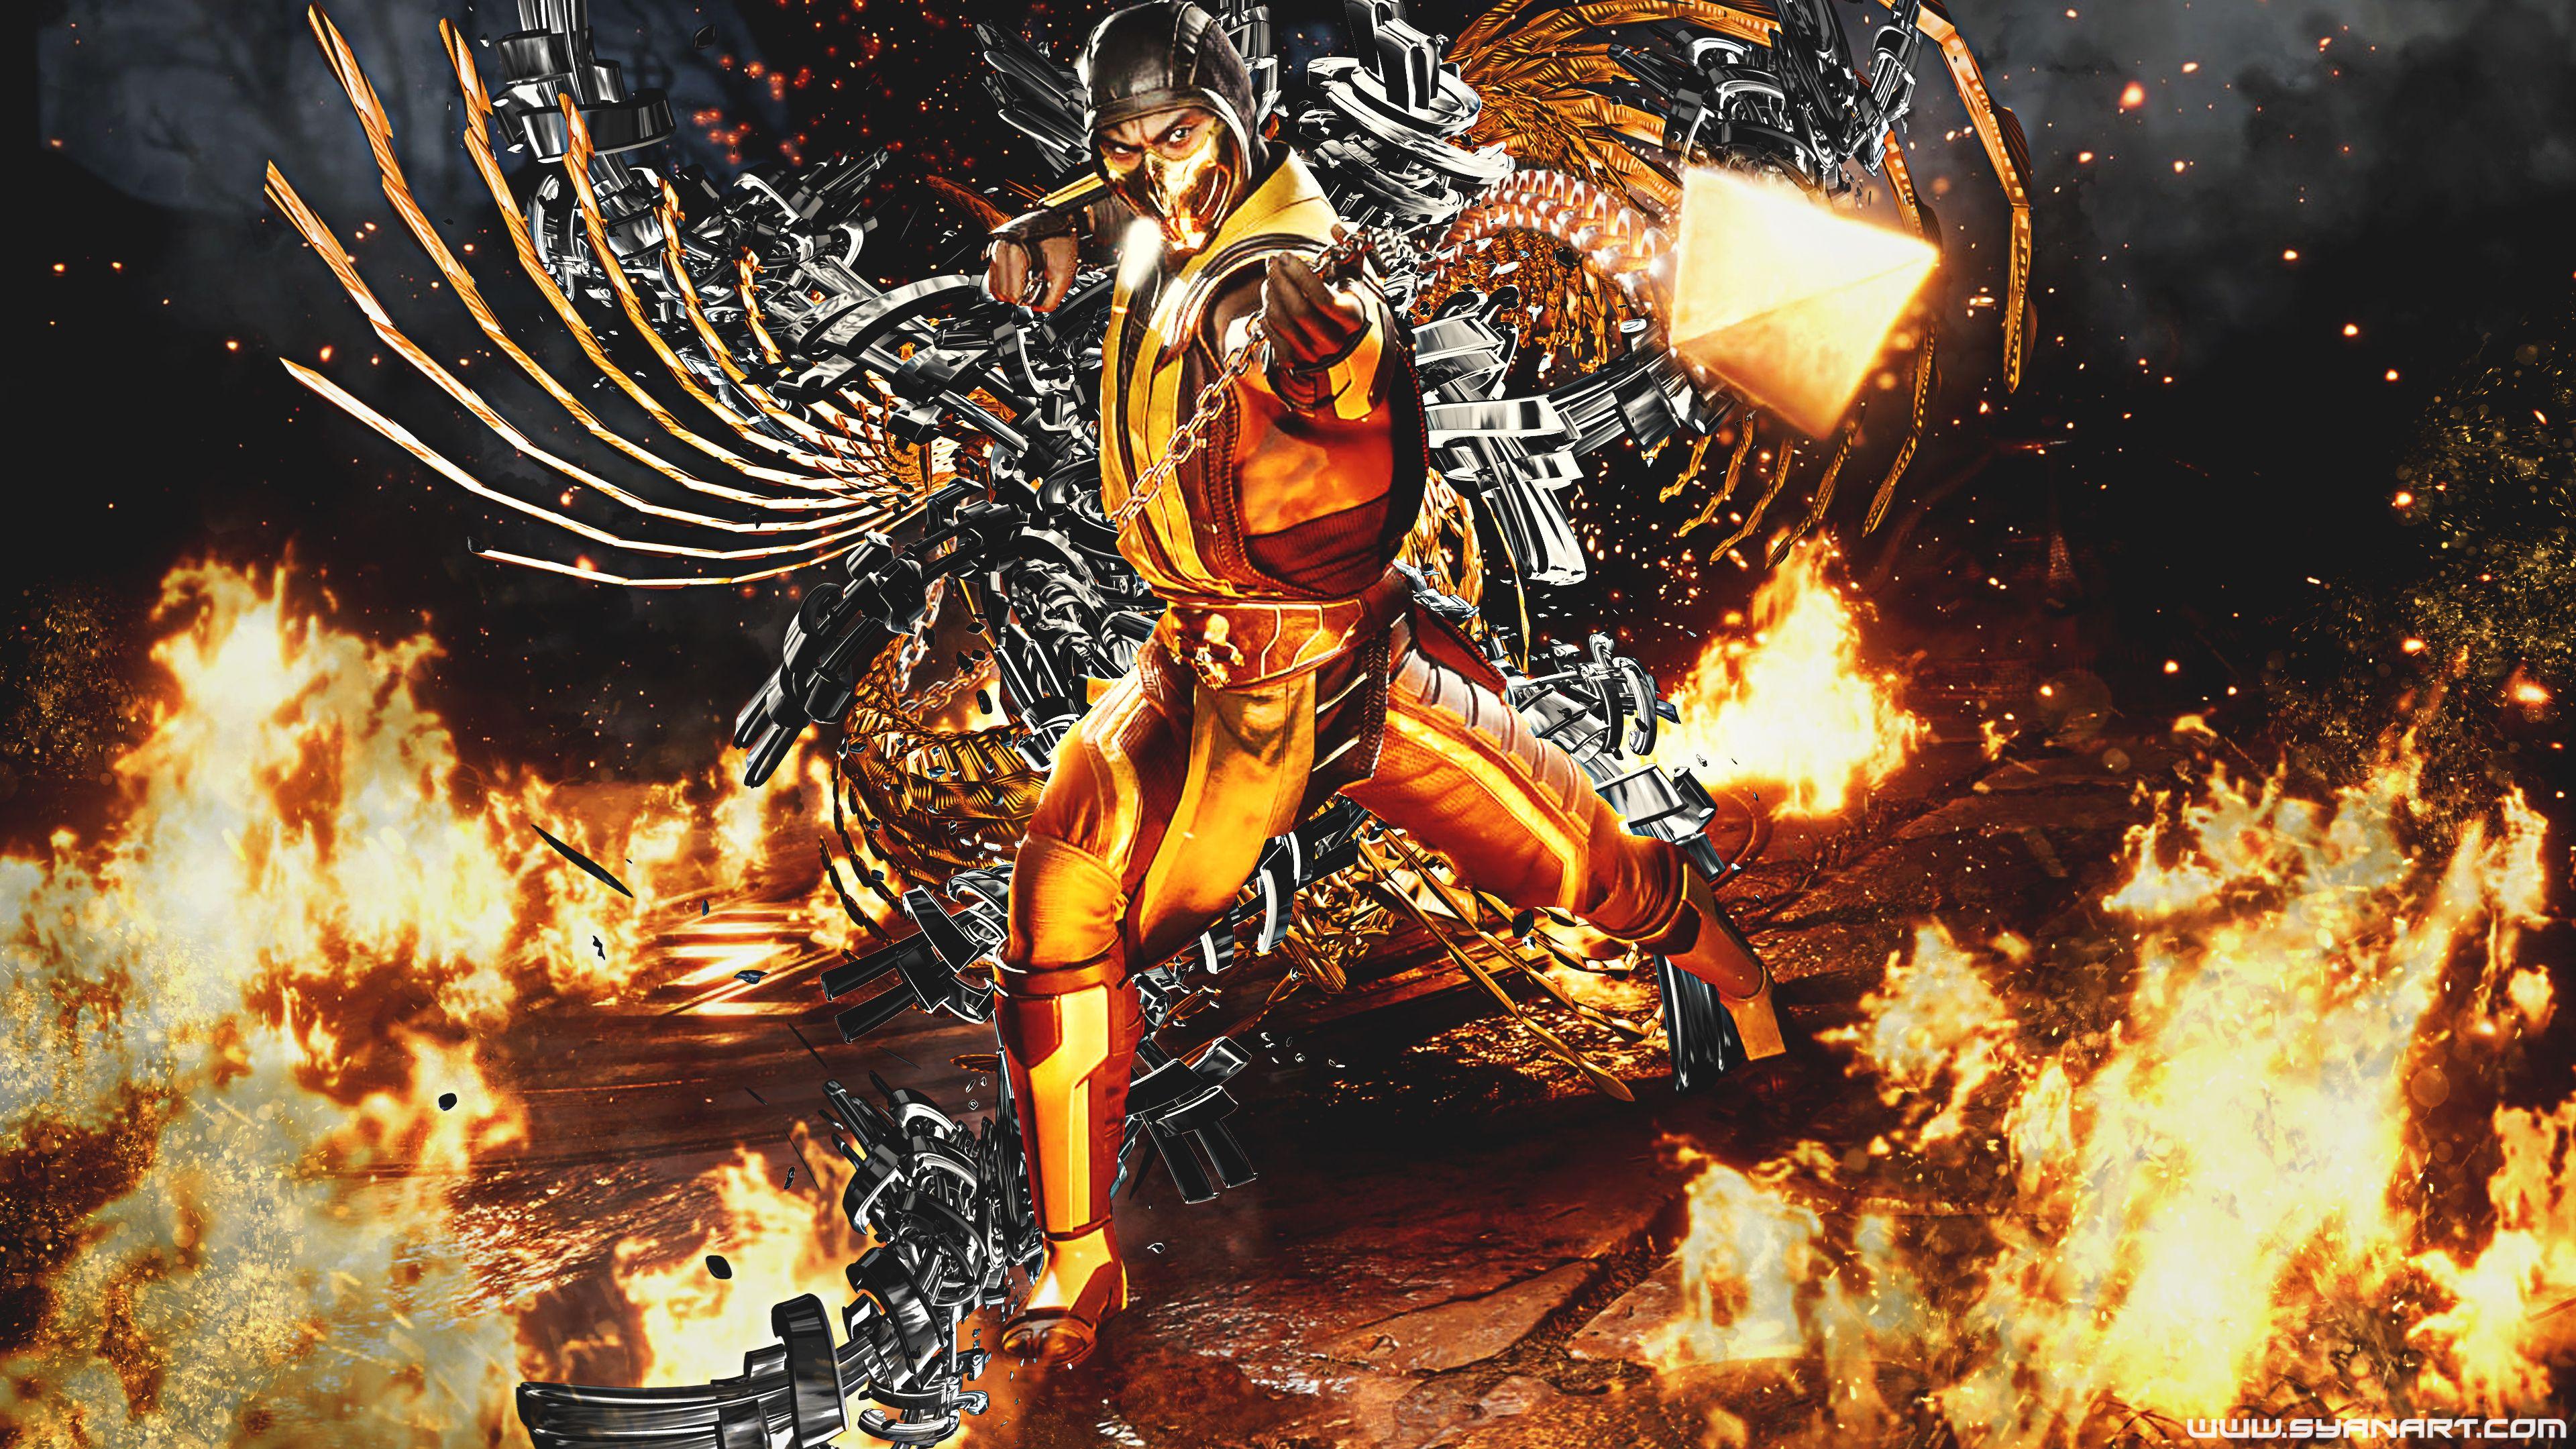 Mortal Kombat 11 Wallpapers - Top Free Mortal Kombat 11 ...